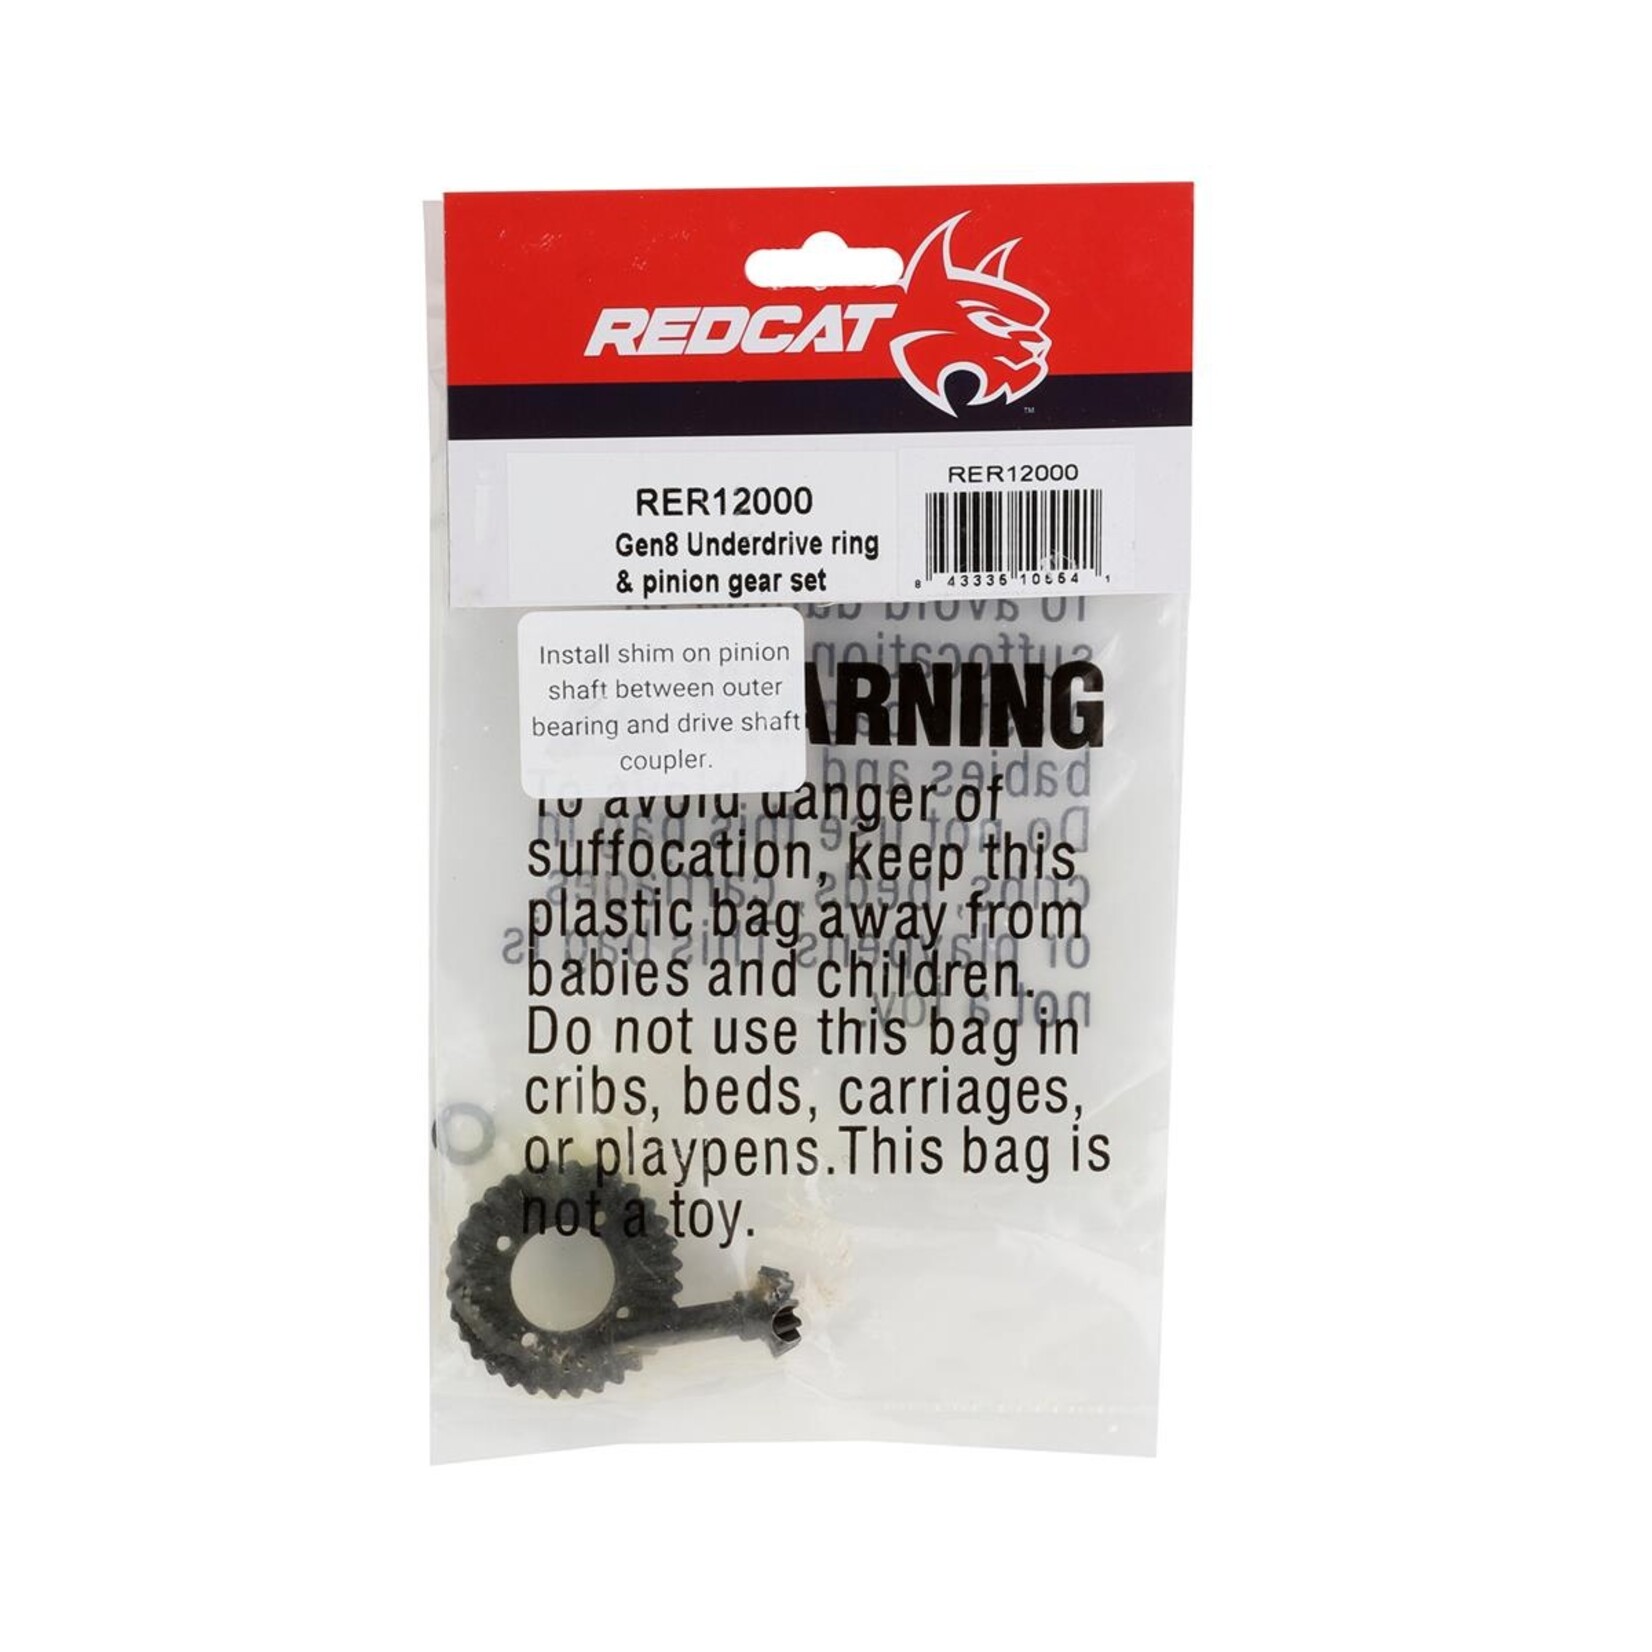 Redcat Racing RedCat Racing Gen8 Underdrive Ring & Pinion Gear Set (32T/10T) #RER12000